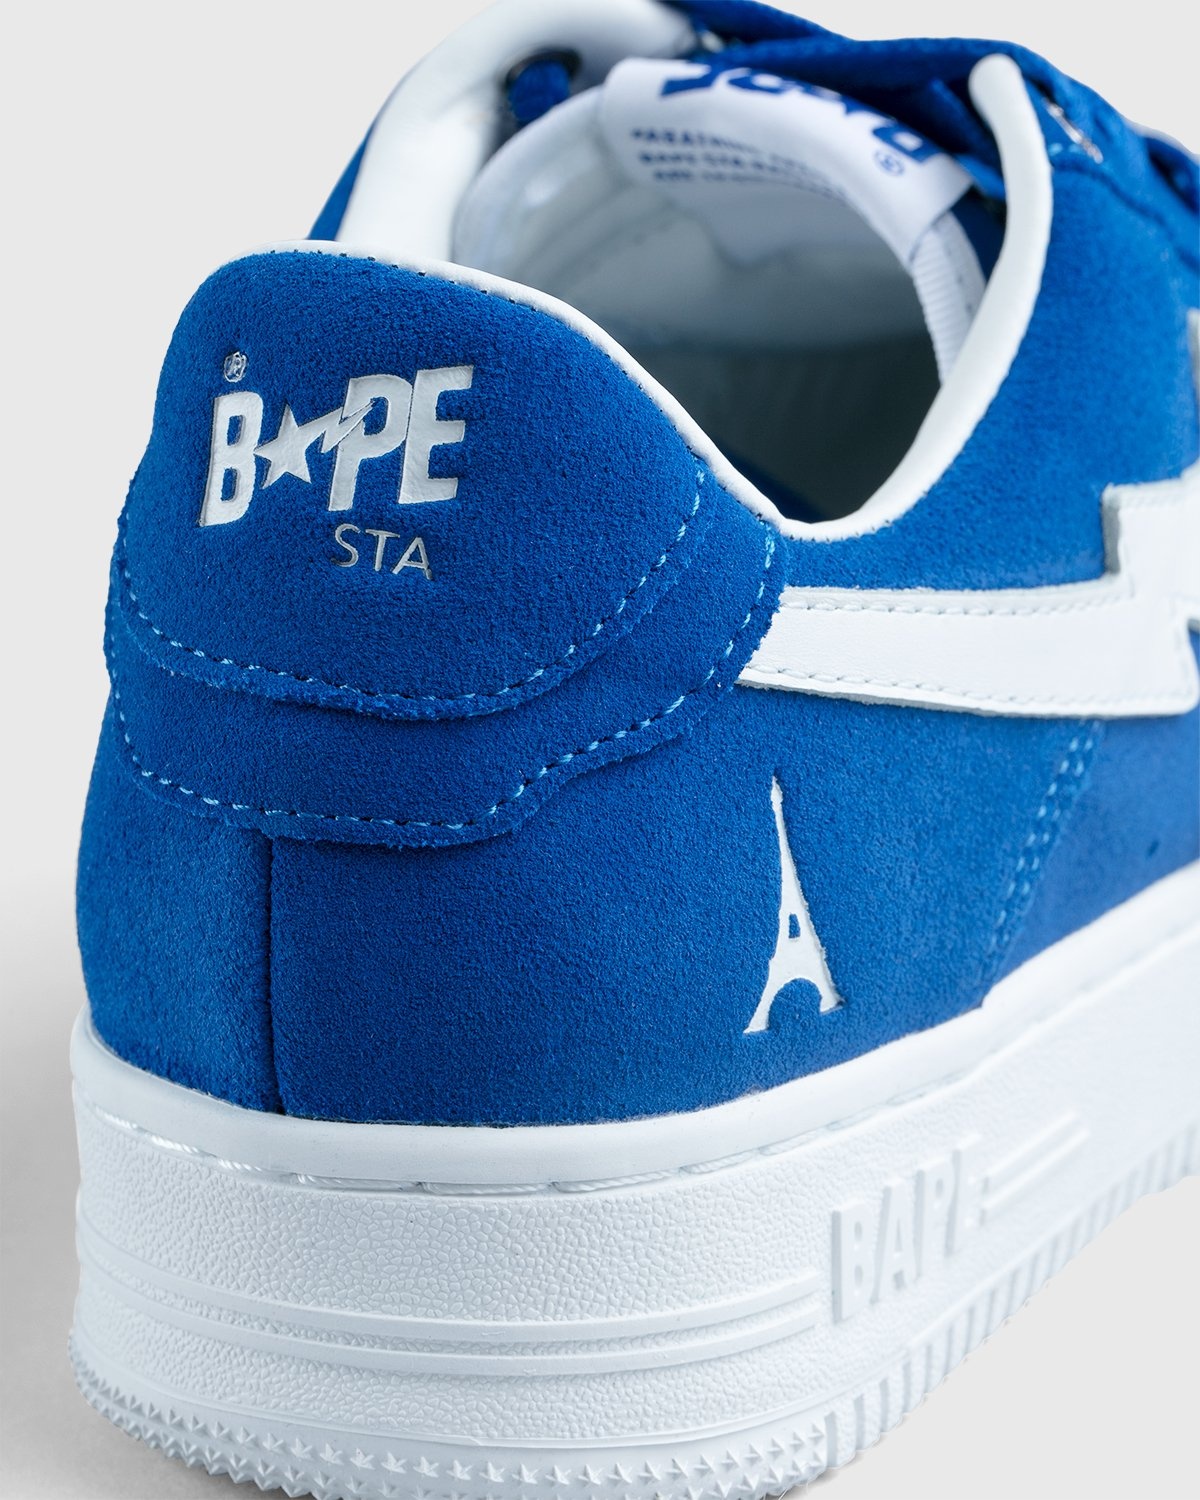 BAPE x Highsnobiety – BAPE STA Blue - Sneakers - Blue - Image 6